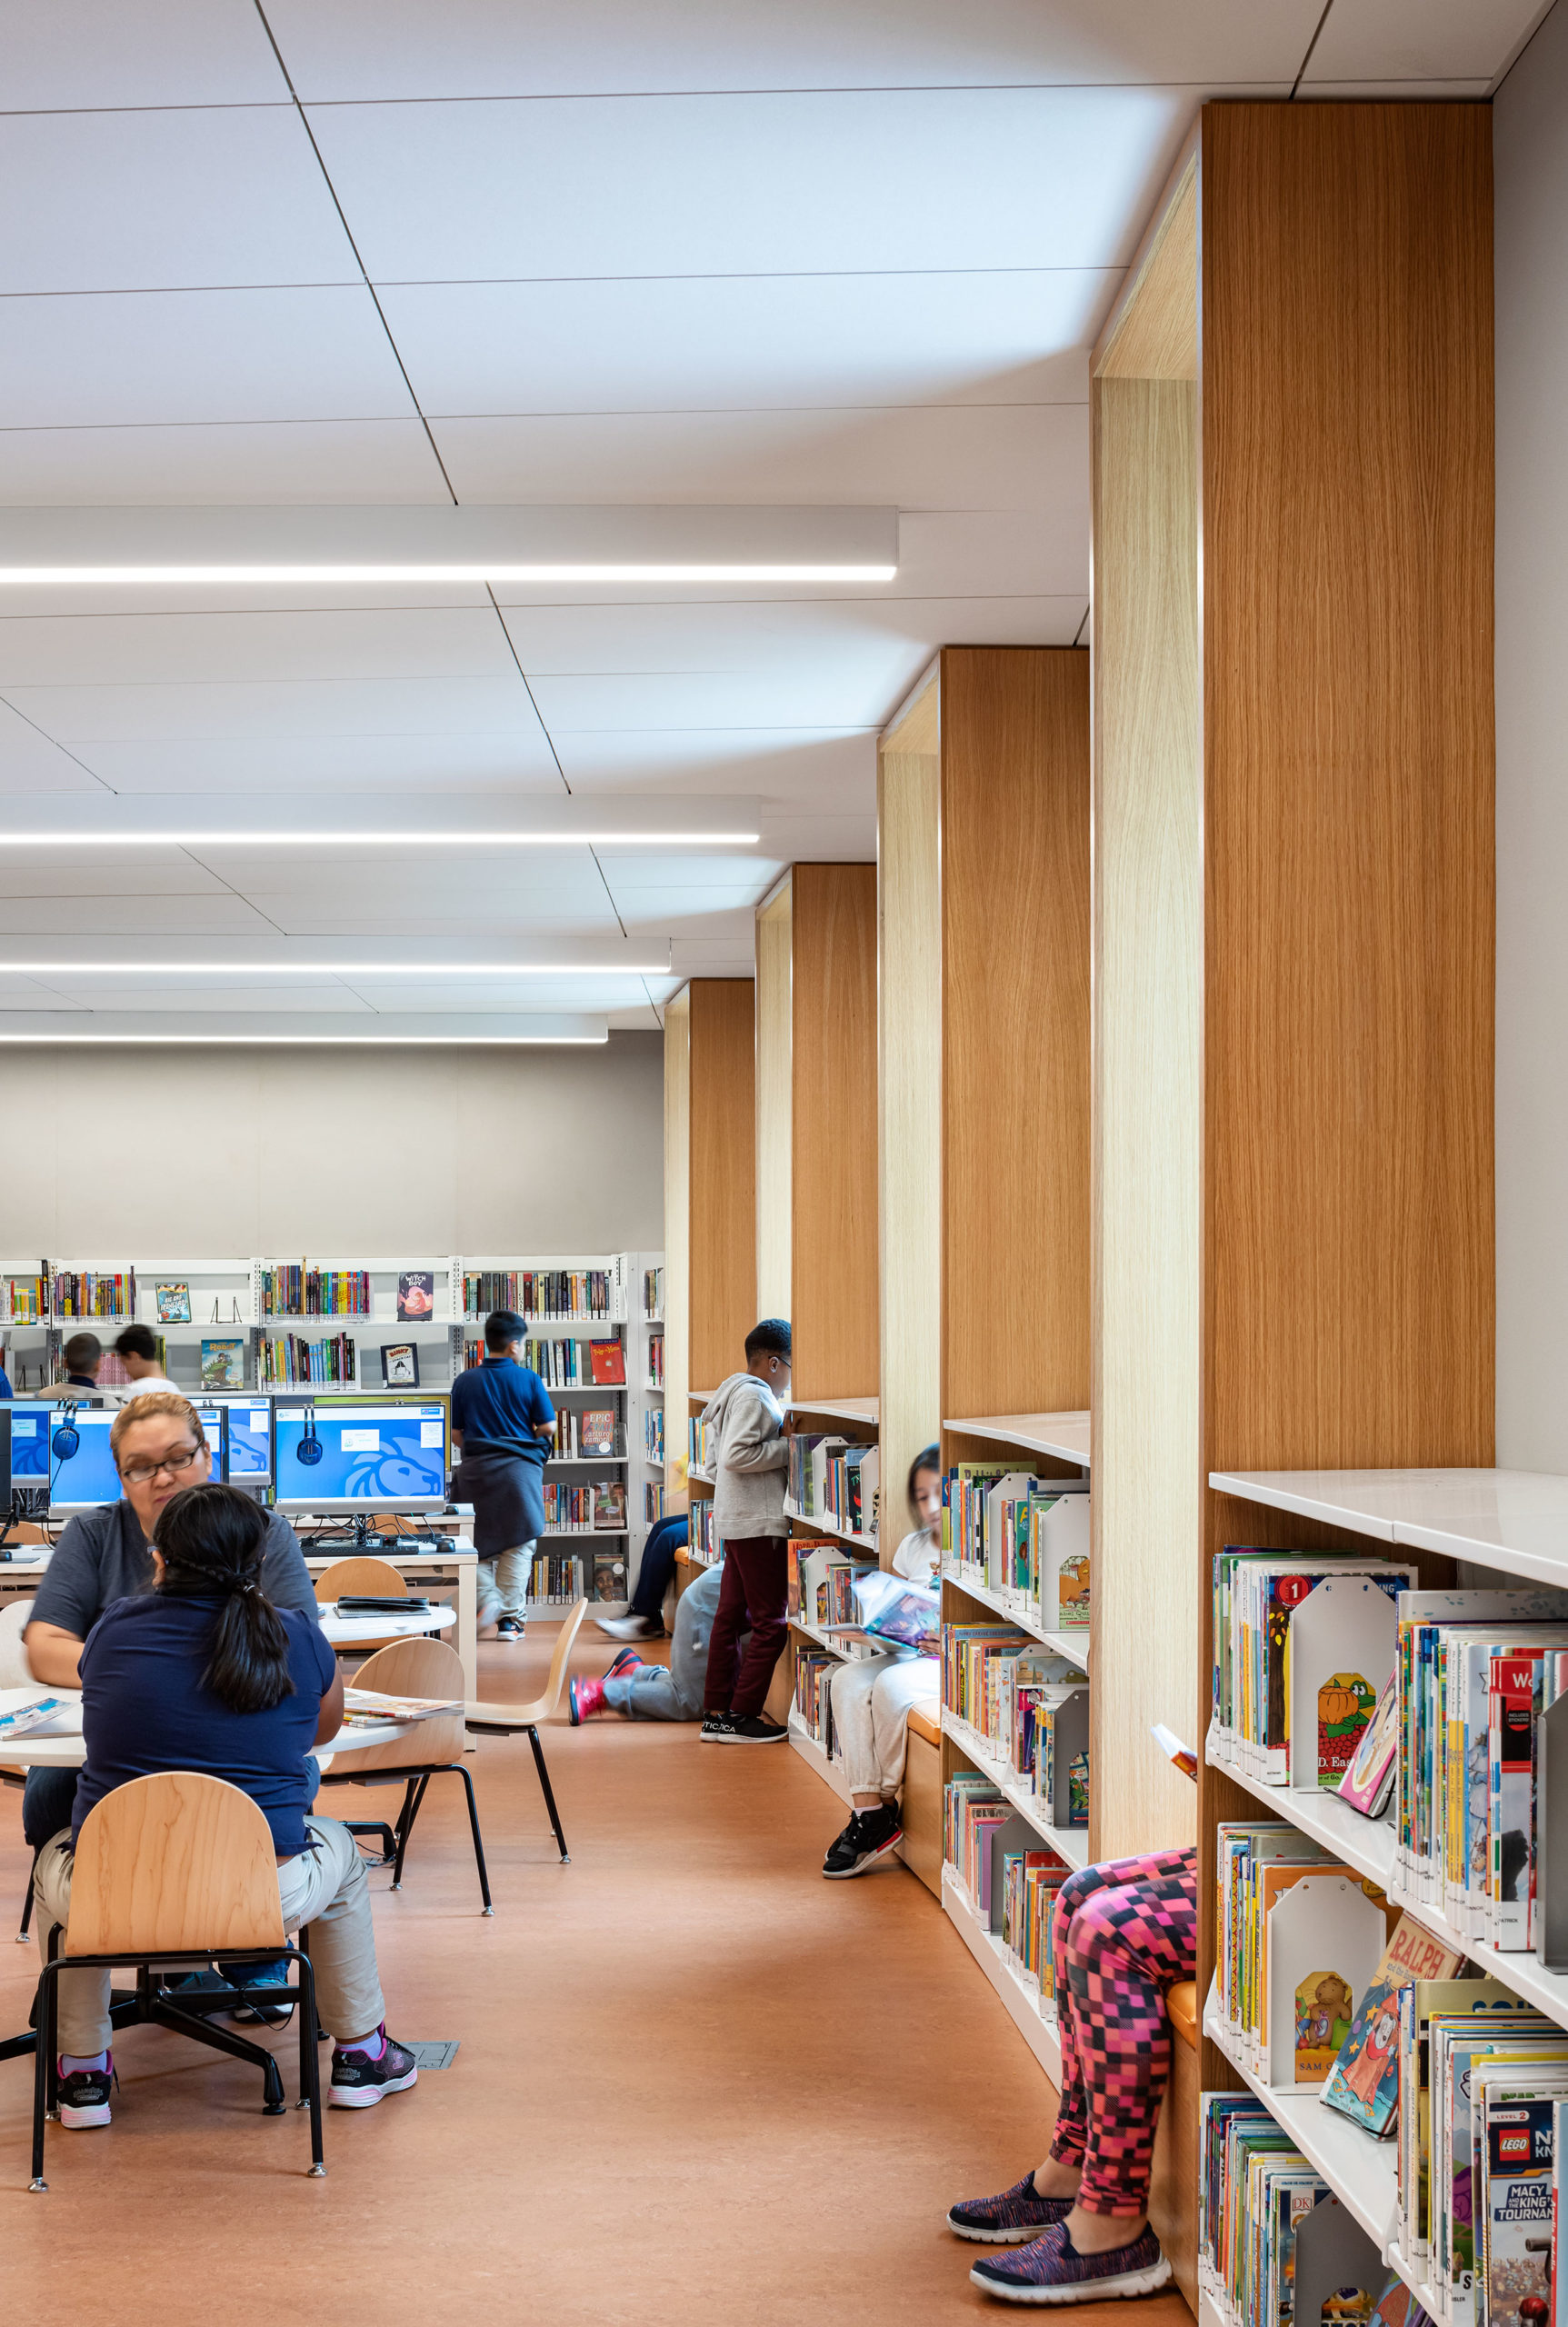 New York Public Library Van Cortlandt Branch. Architect: Andrew Berman Architect. Location: Bronx, NY. Photo: Michael Moran.